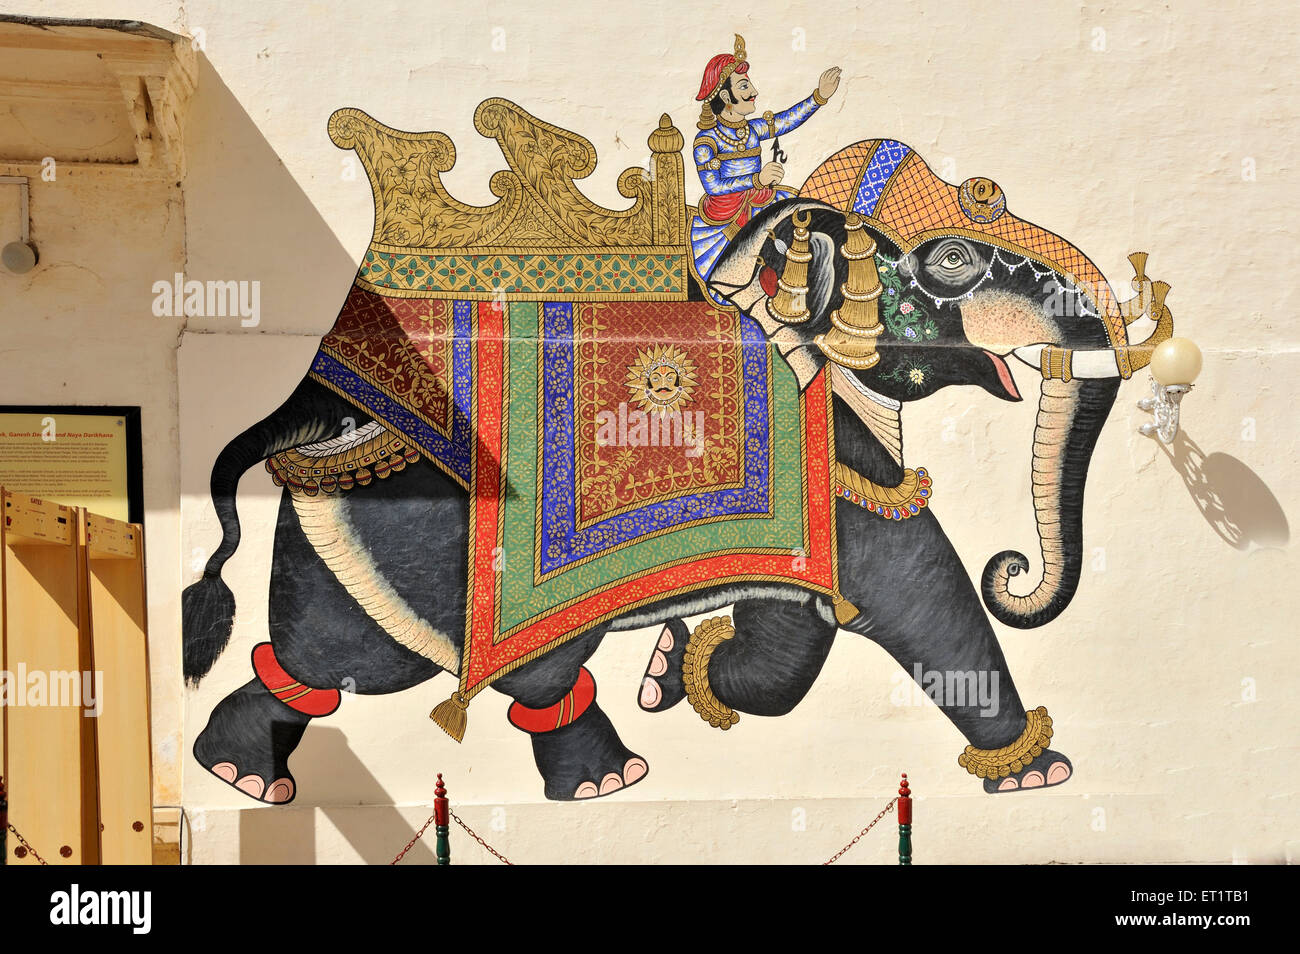 Wandbild Elefanten in Stadt Palast Museum Udaipur, Rajasthan Indien Asien Stockfoto